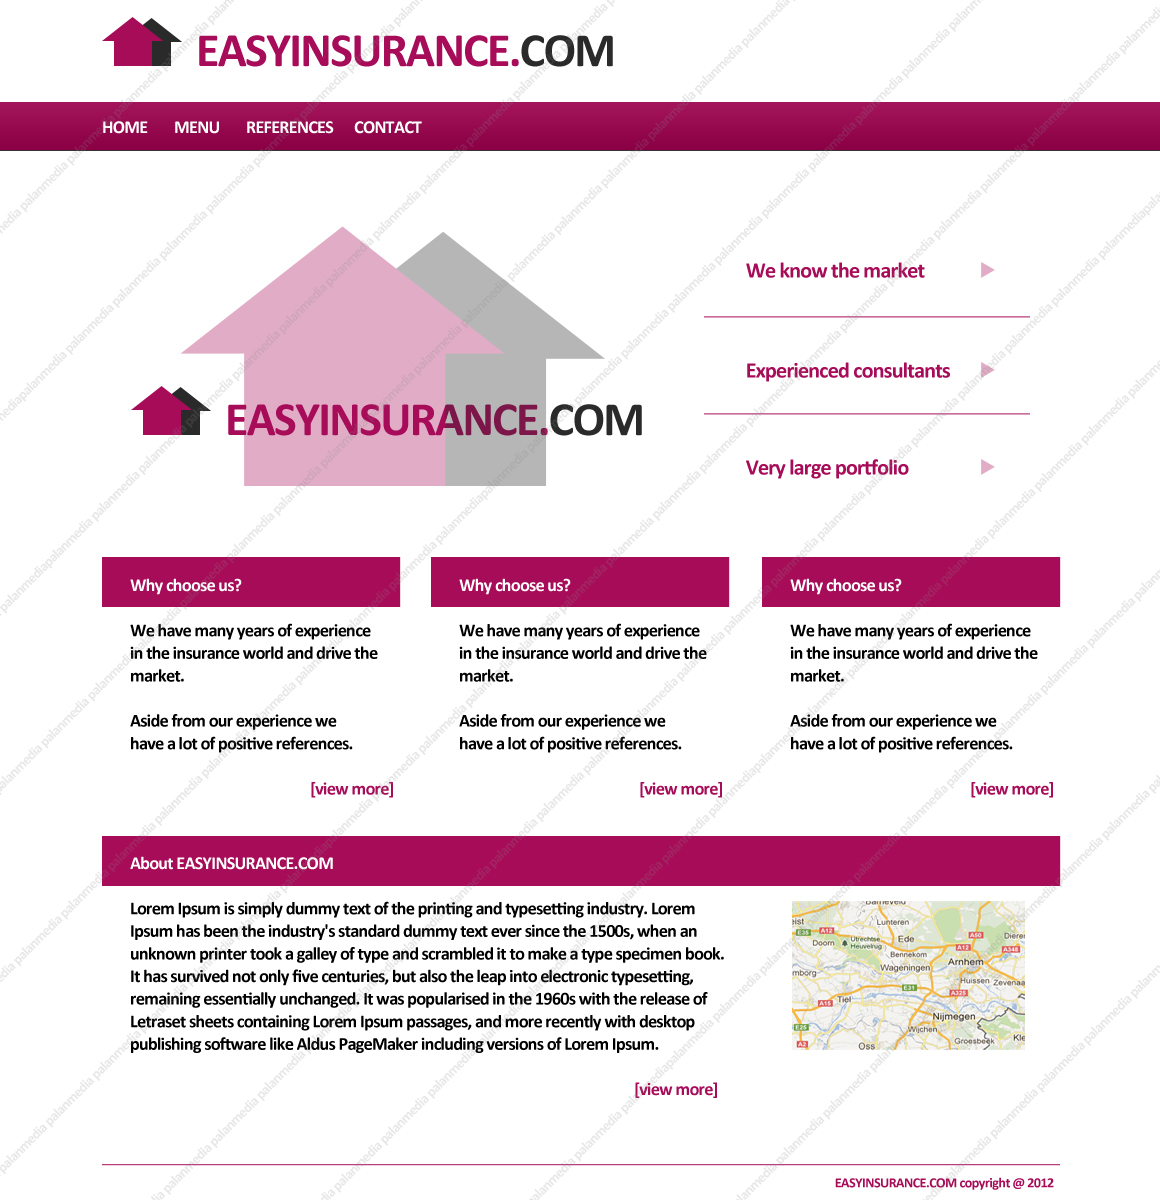 Multi Inzetbaar Bedrijfslayout-easyinsurance-jpg